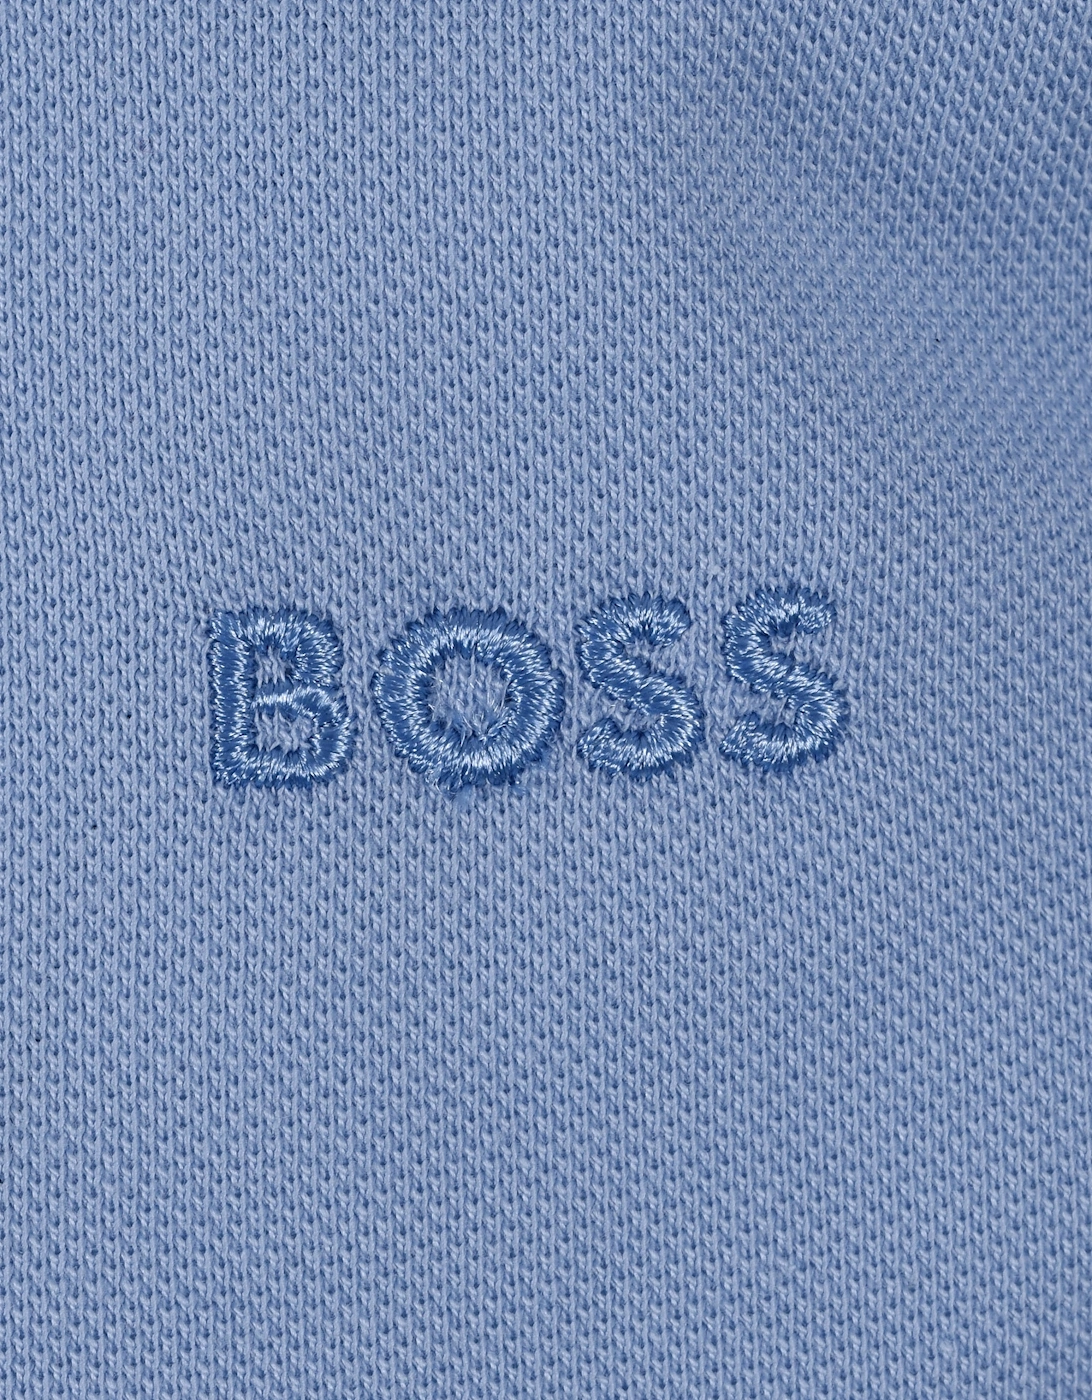 Boss Pallas Polo Shirt Open Blue